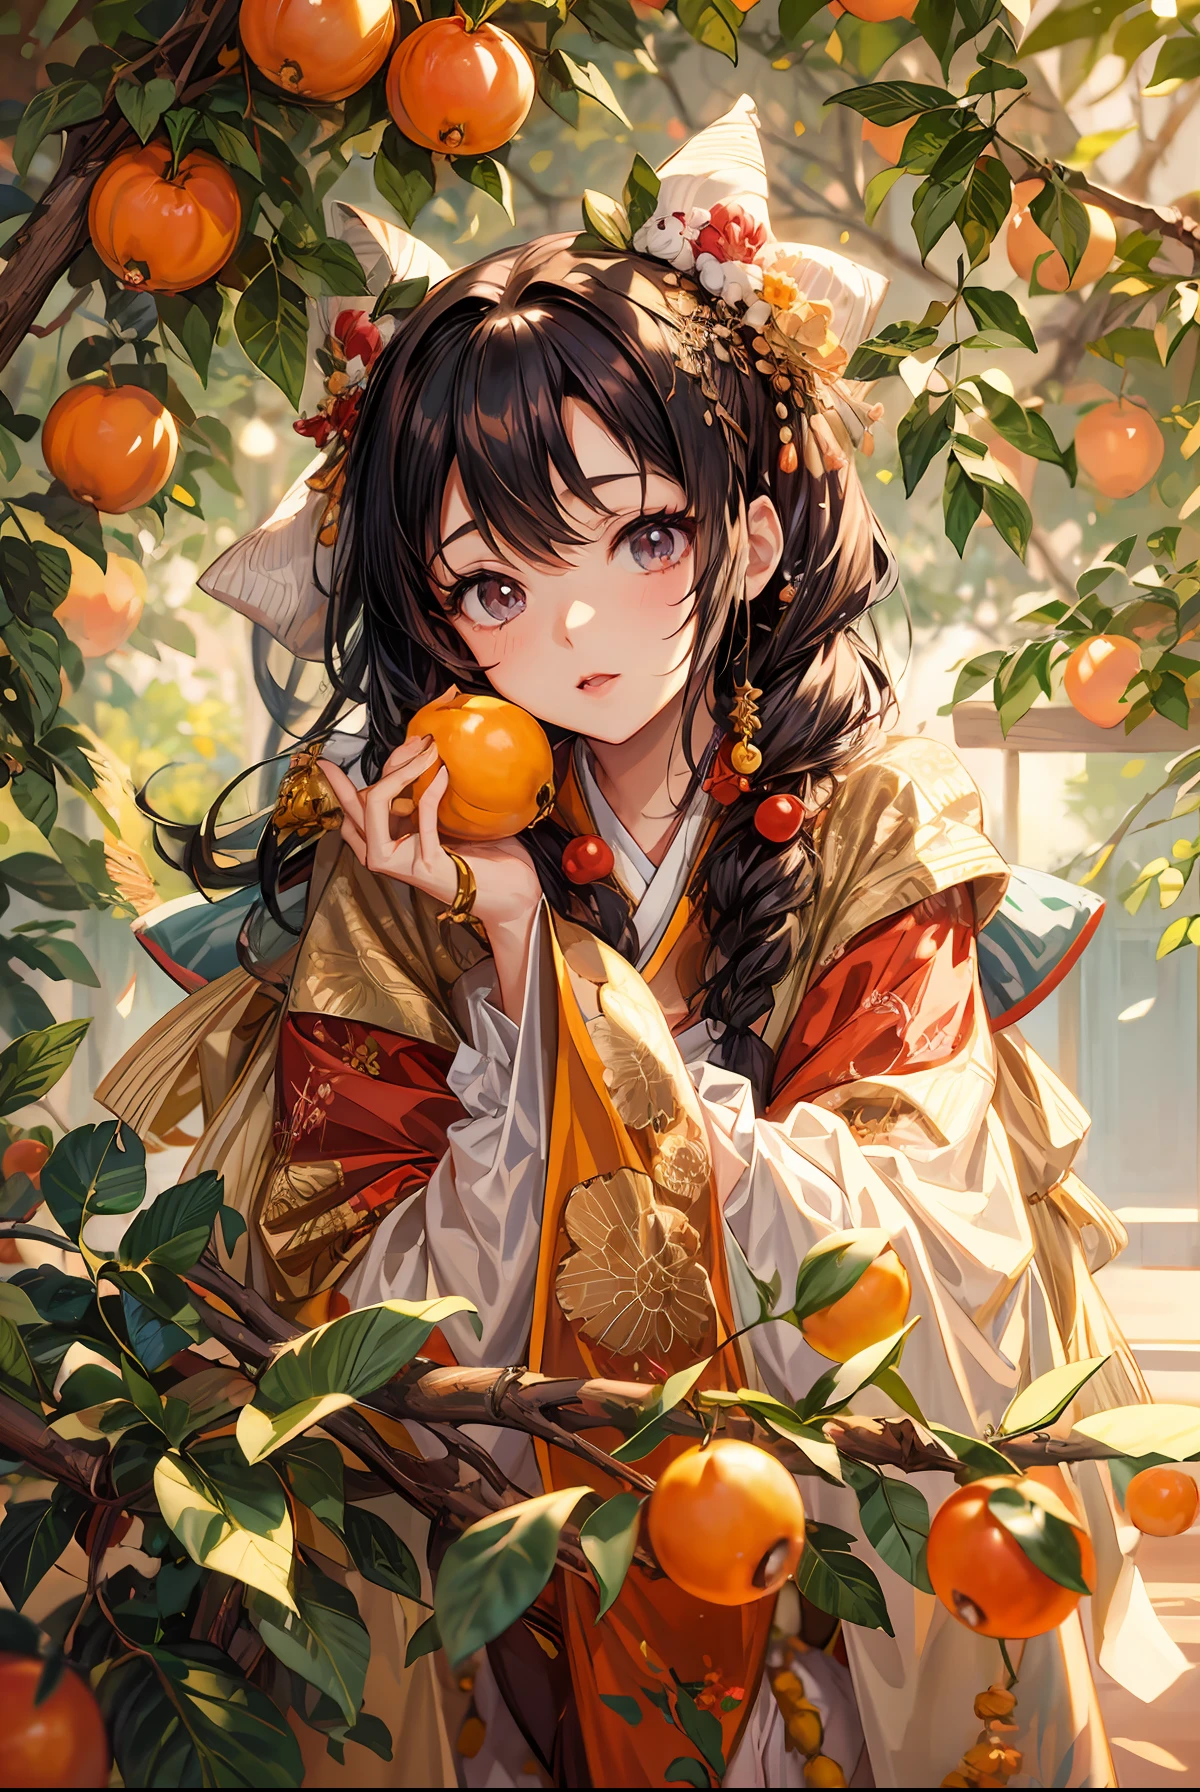 Oranges & Lemons - AnimeSongs.org